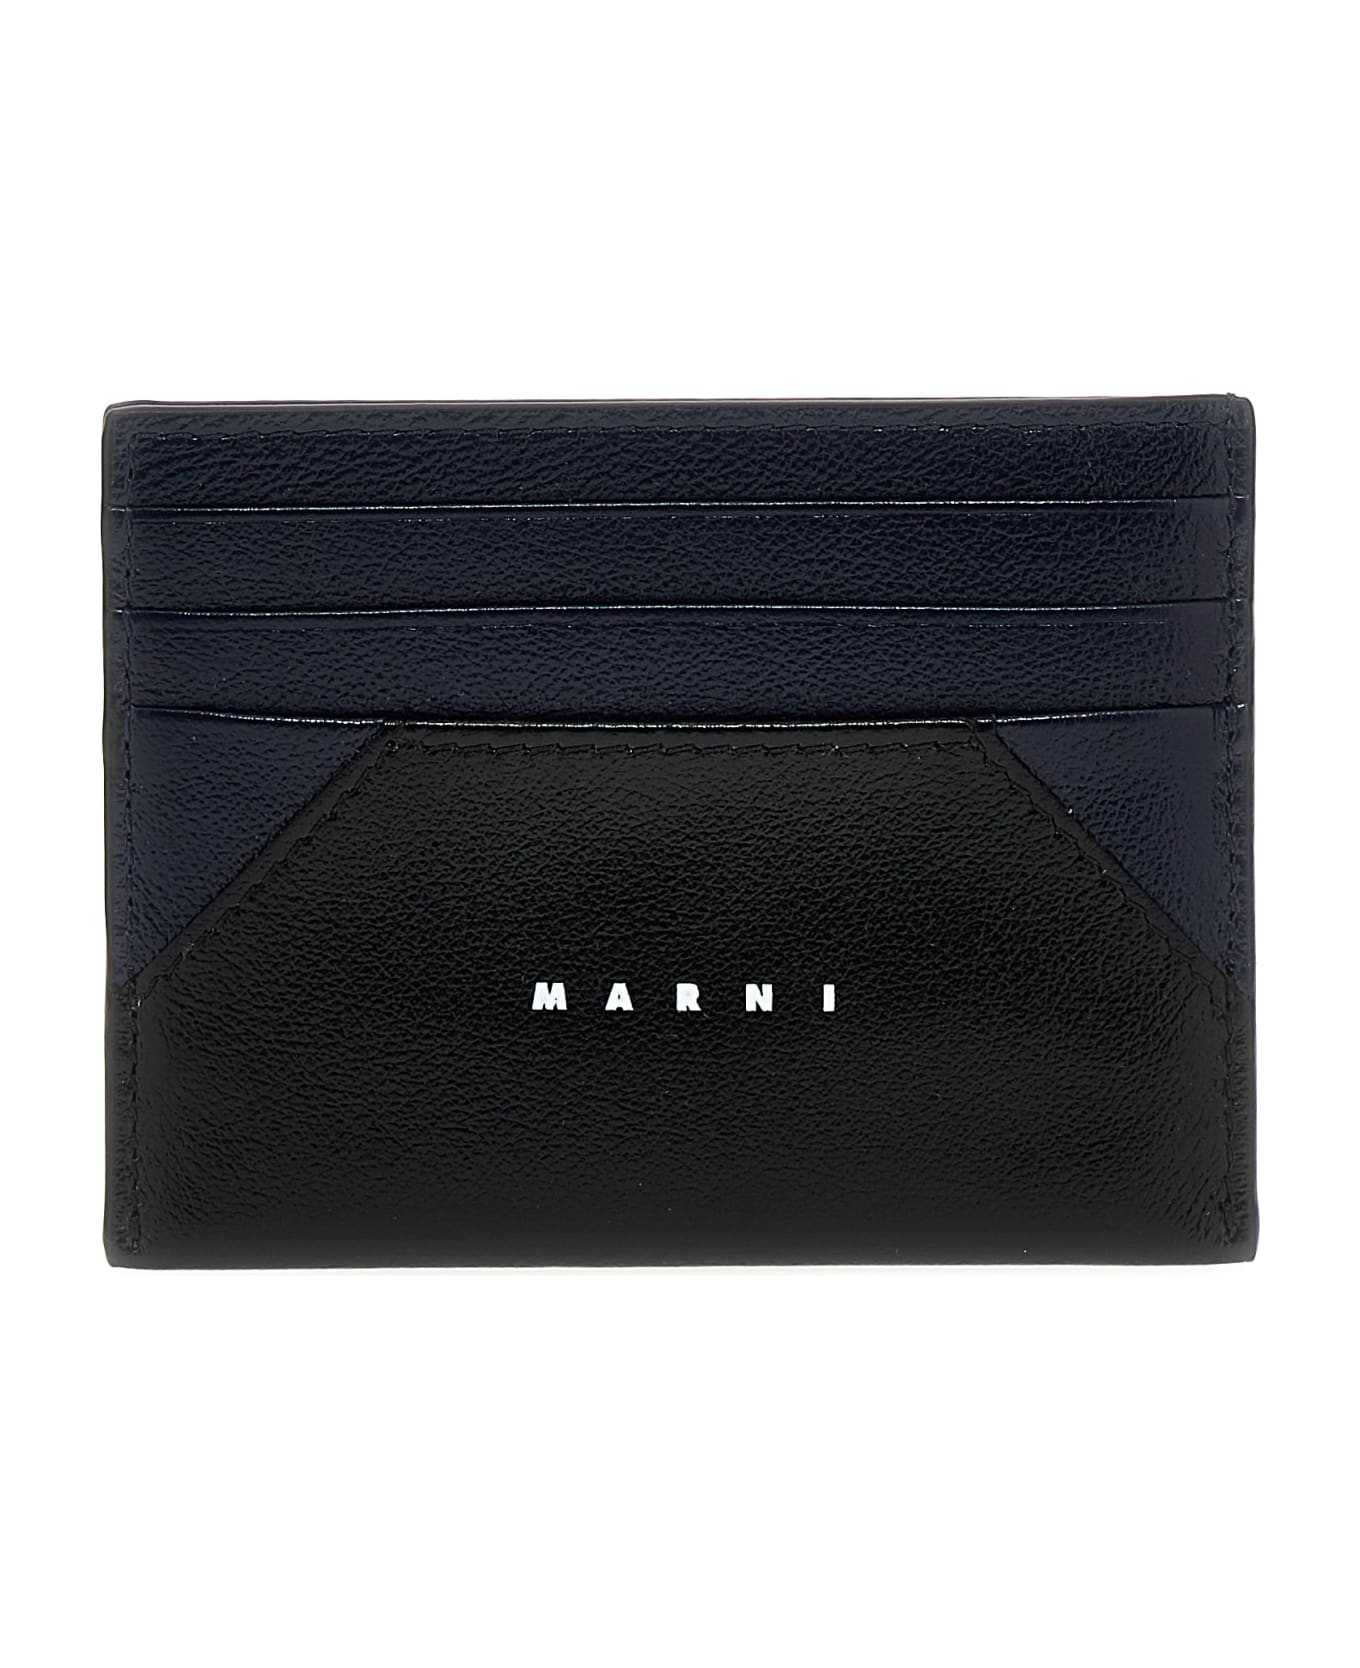 Marni Logo Leather Card Holder - Multicolor